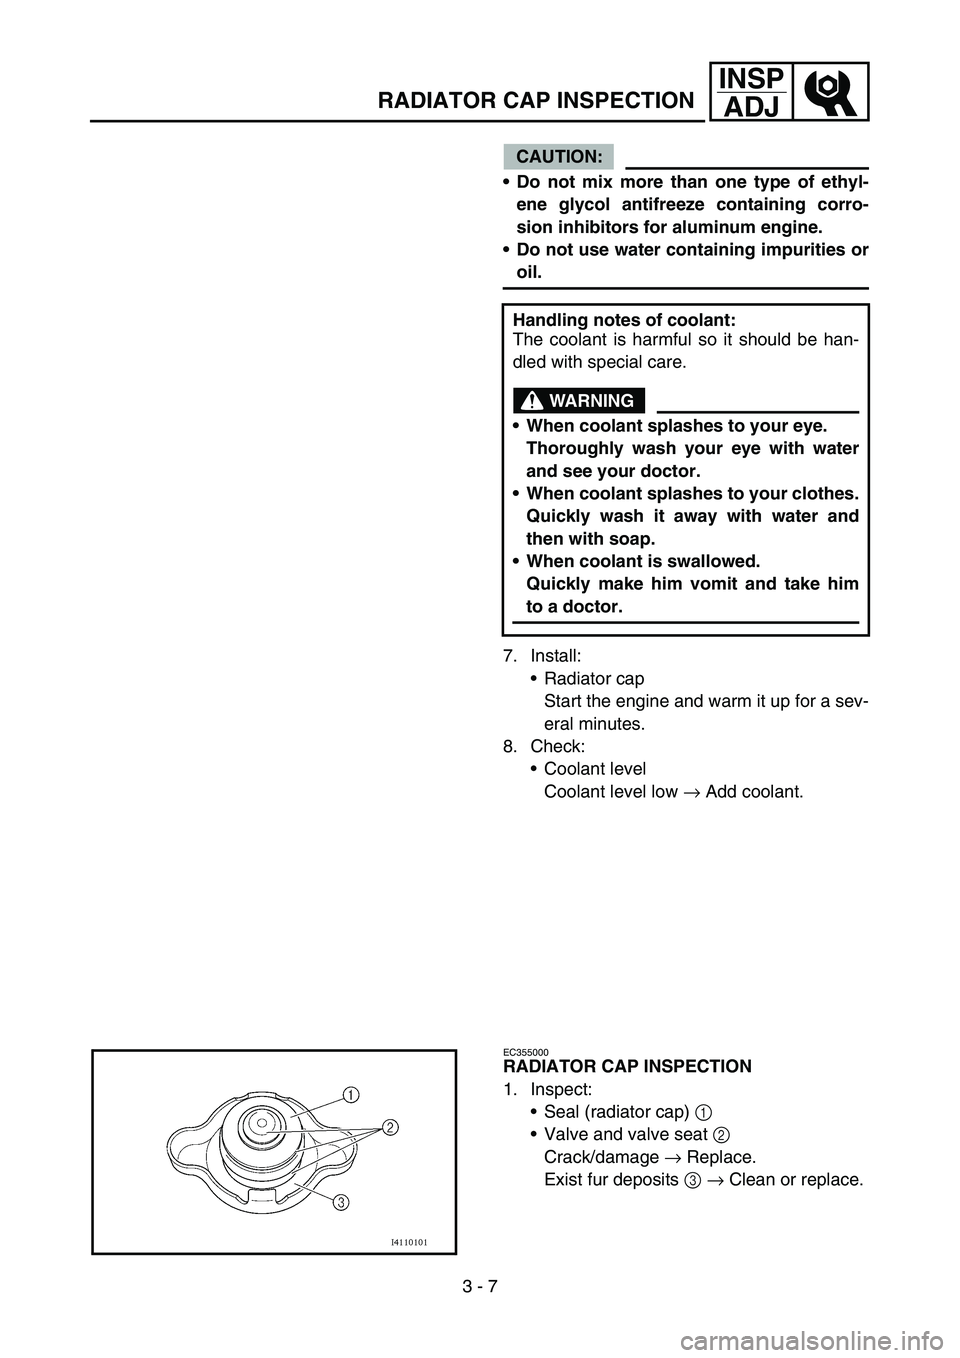 YAMAHA YZ250F 2007  Owners Manual 3 - 7
INSP
ADJ
RADIATOR CAP INSPECTION
CAUTION:
Do not mix more than one type of ethyl-
ene glycol antifreeze containing corro-
sion inhibitors for aluminum engine.
Do not use water containing impur